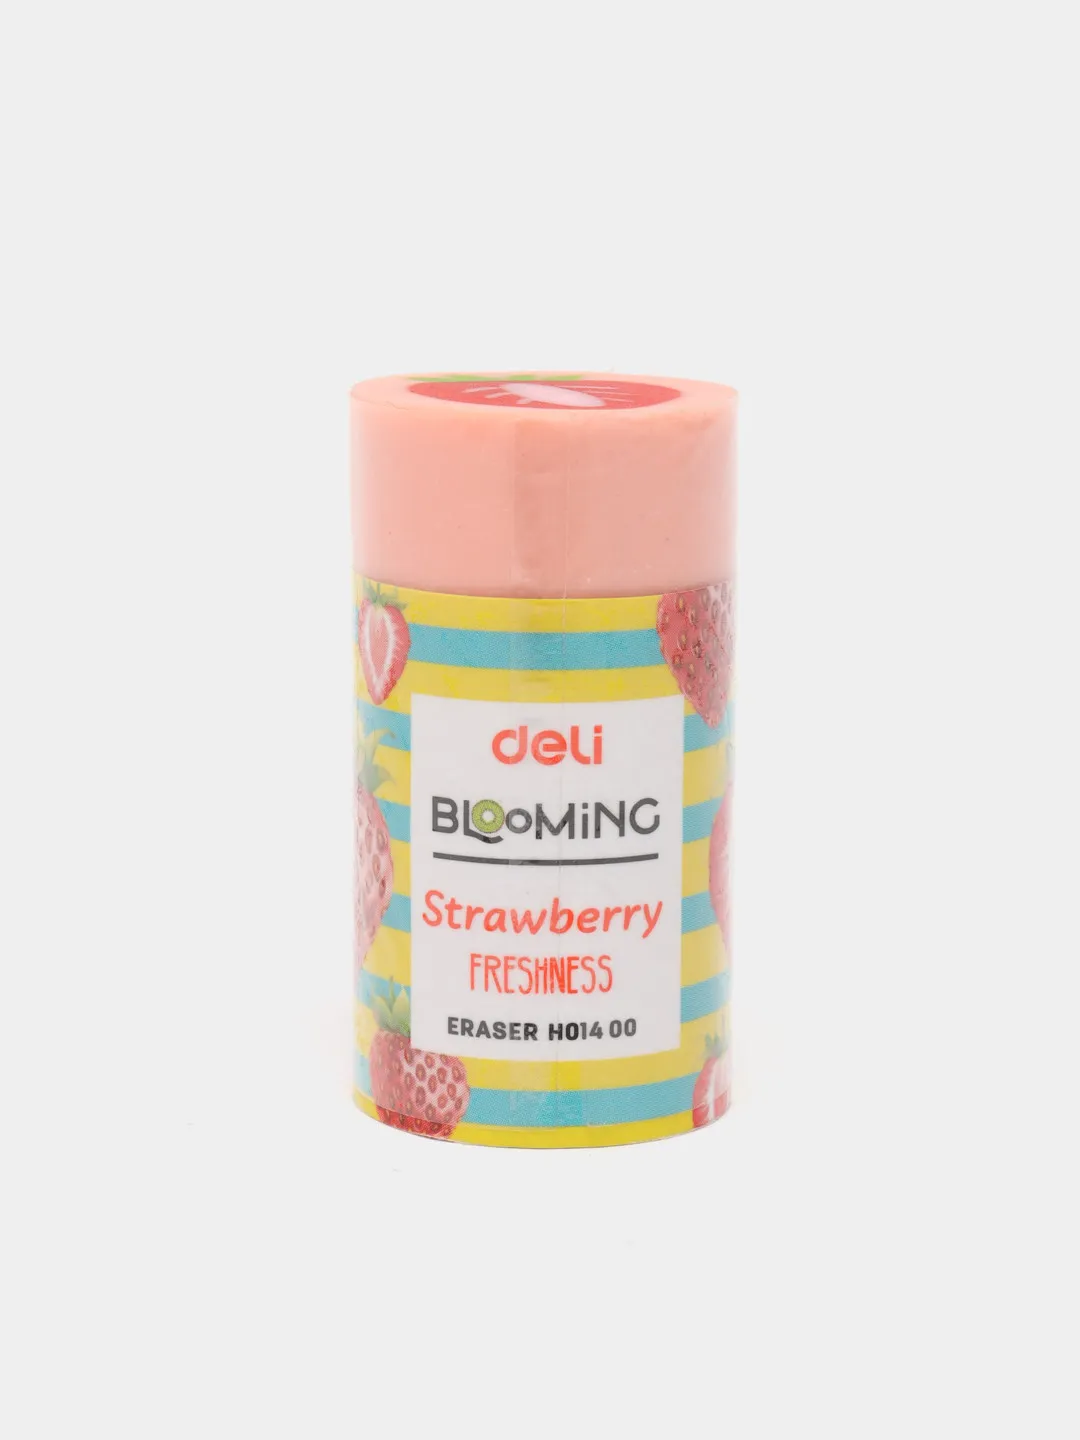 Eraser 01400 Deli Blooming#1